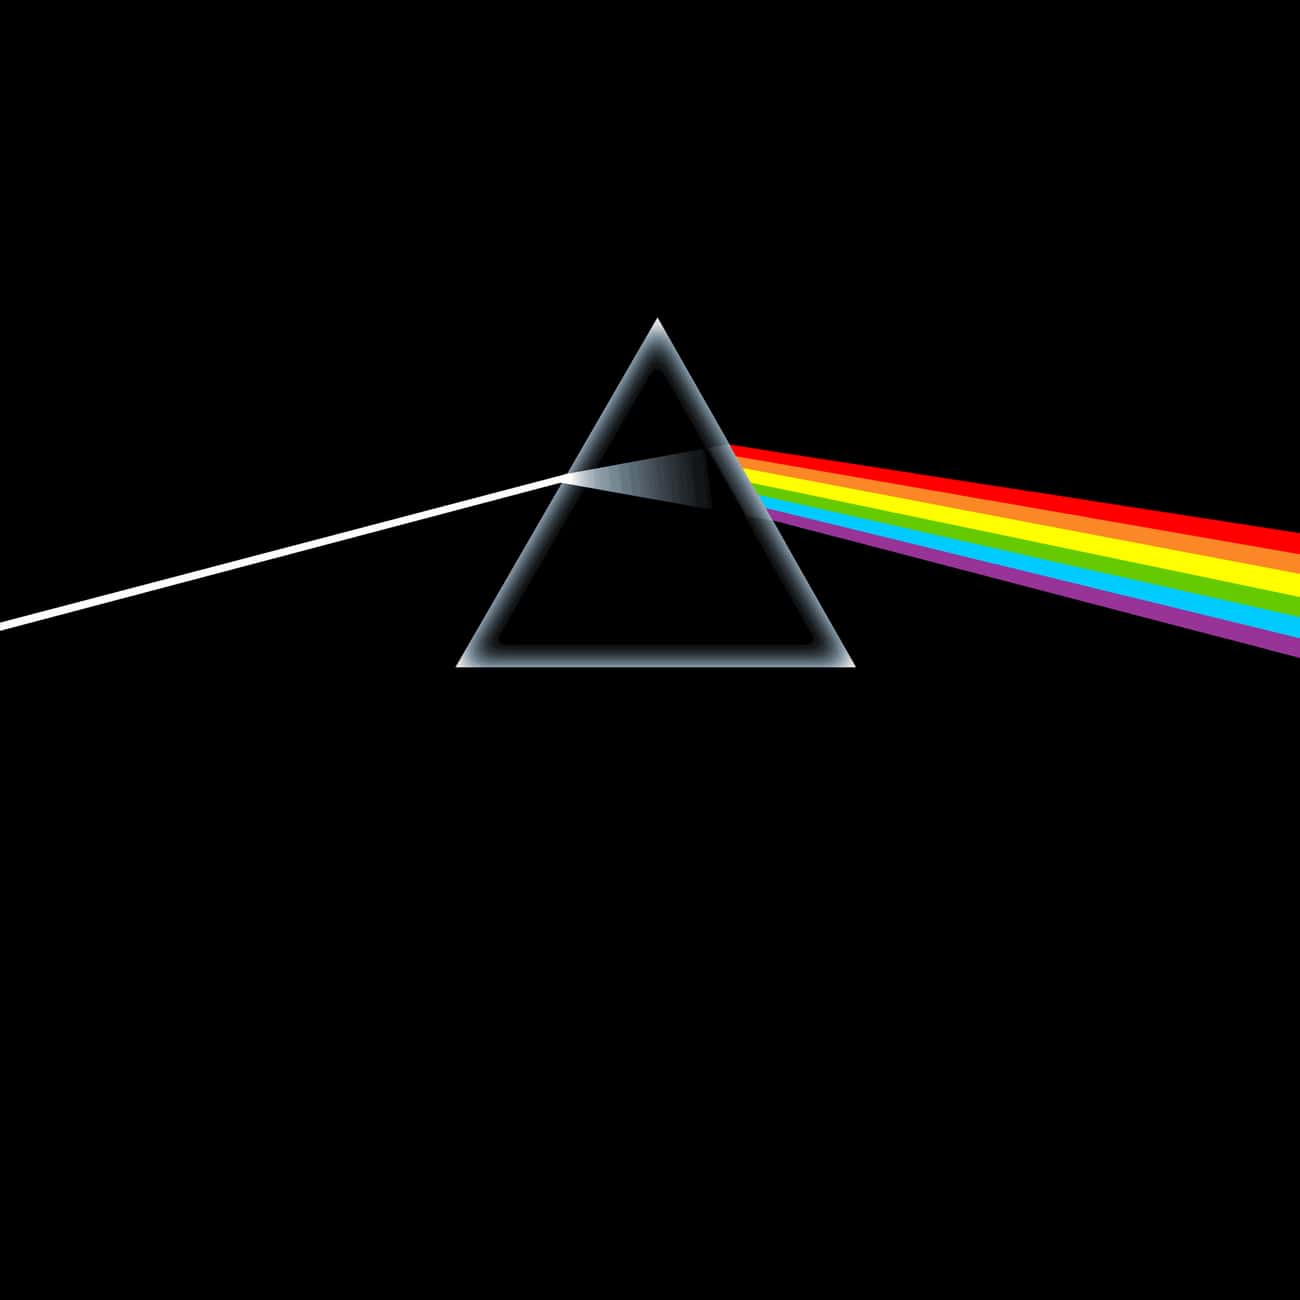 Pink Floyd